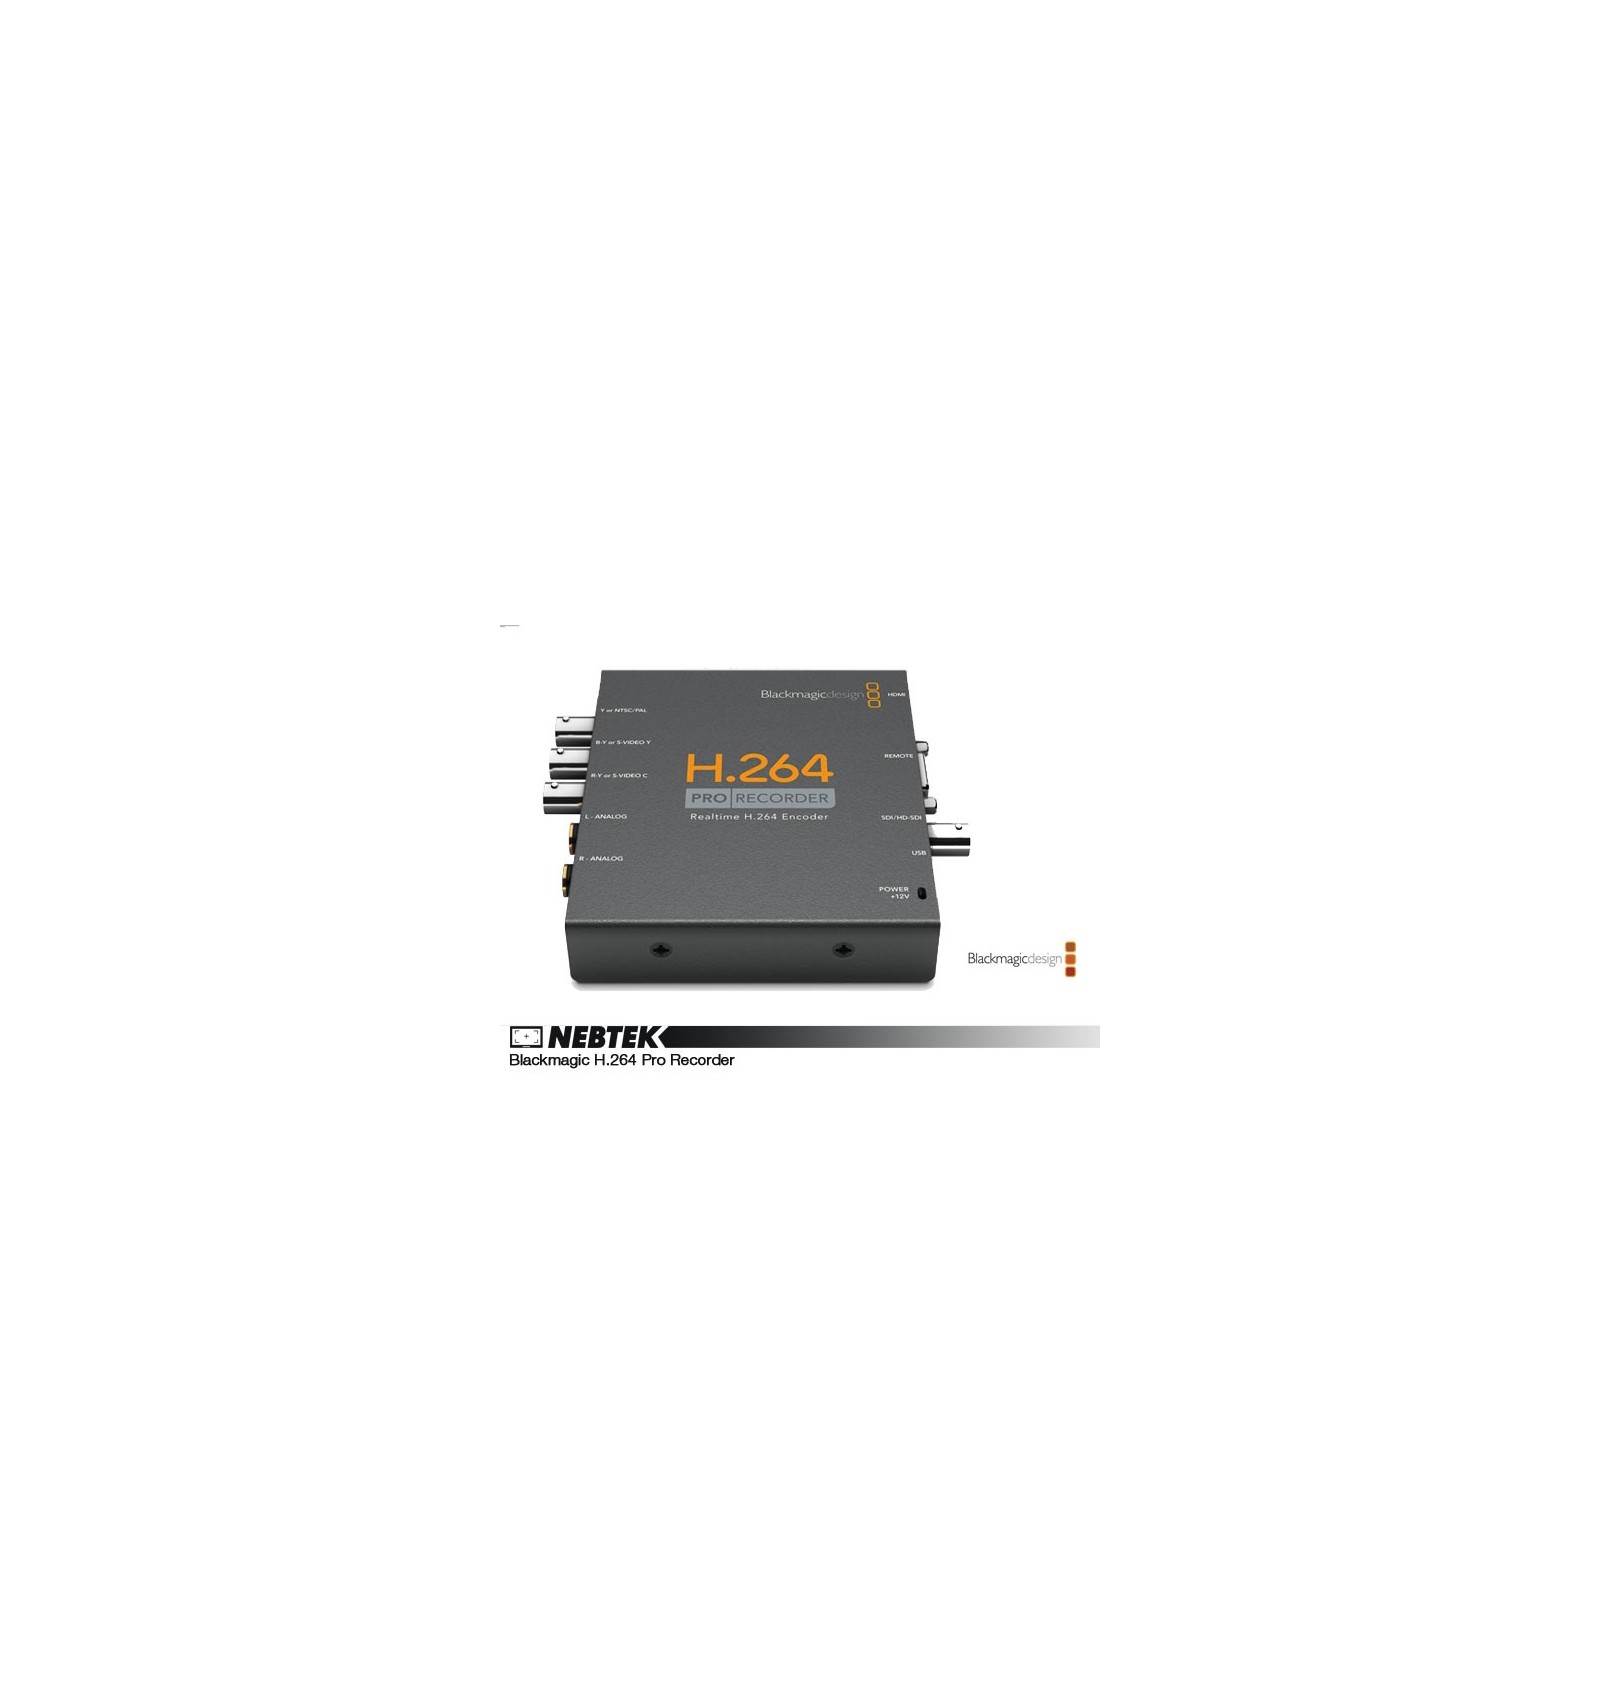 Blackmagic H.264 Pro Recorder - NEBTEK - 3D | HD | 4K Video Assist 